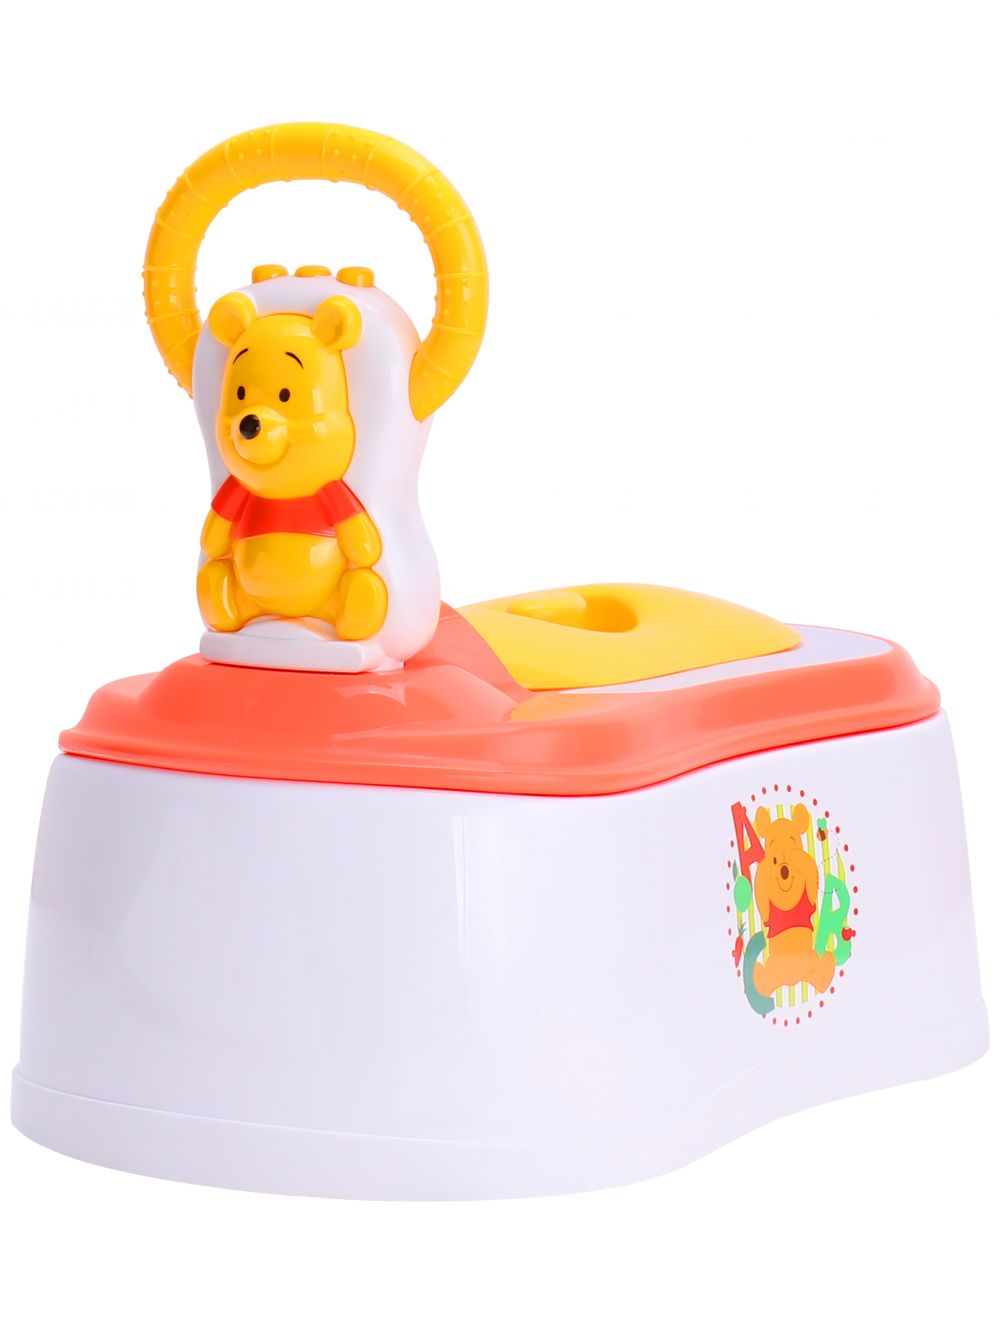 Junior Baby Potty Seat Pooh Yellow & White